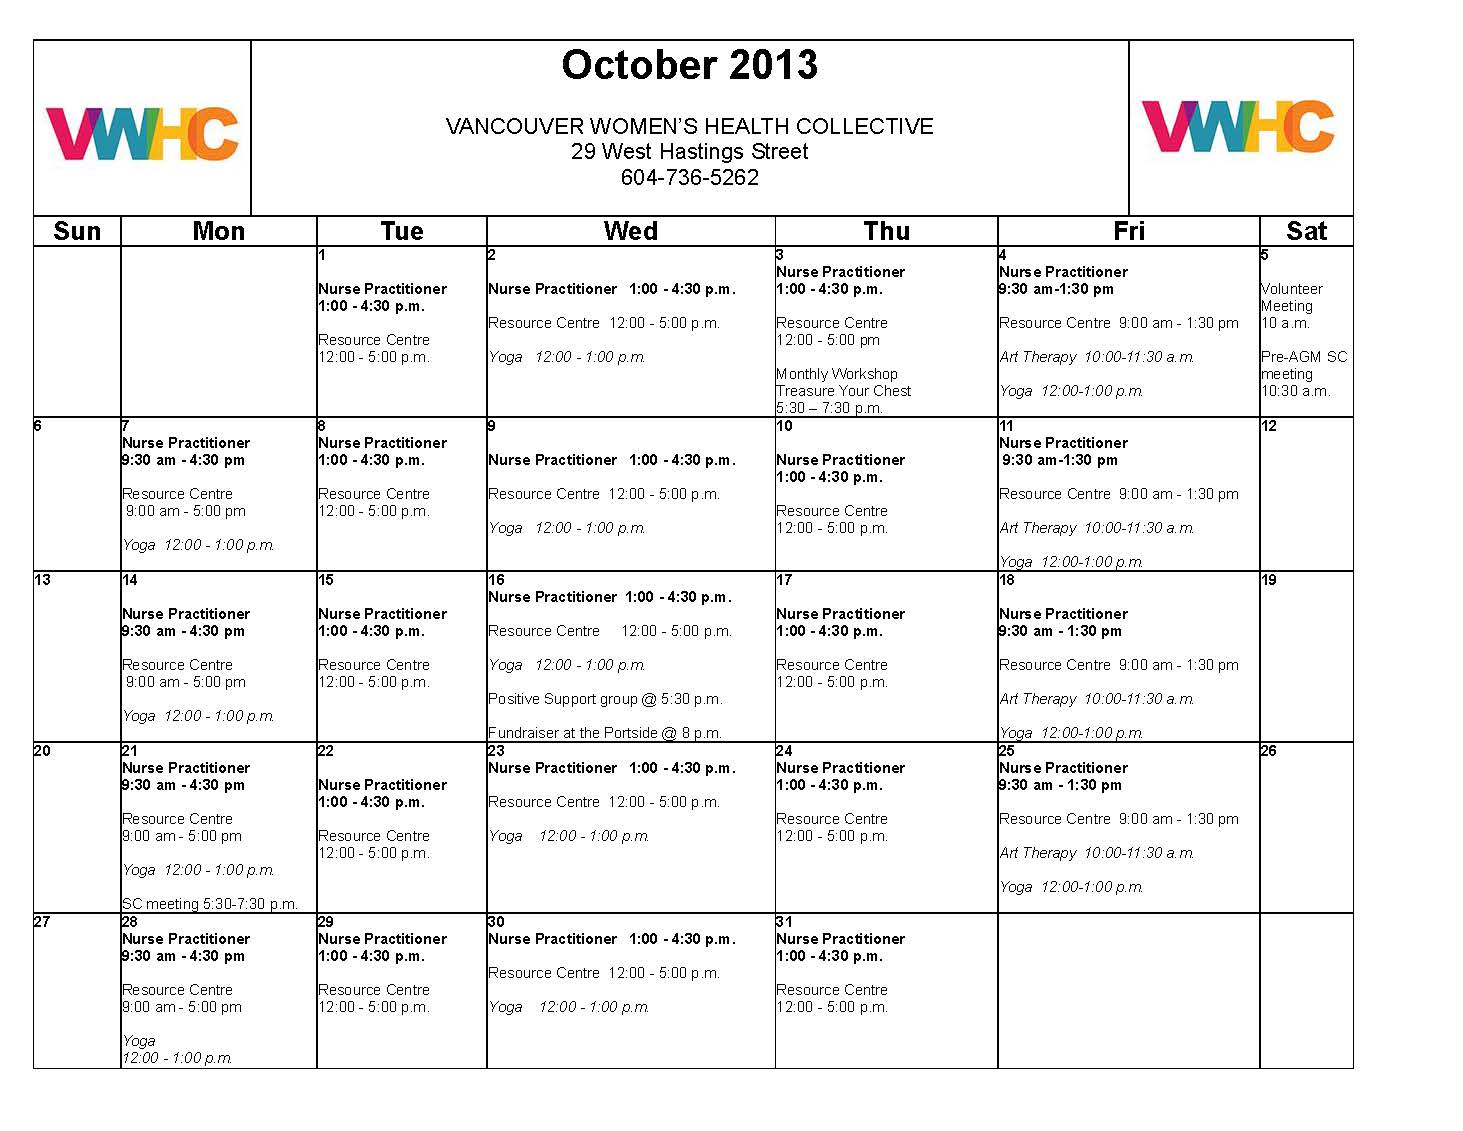 VWHC October 2013 Calendar FINAL